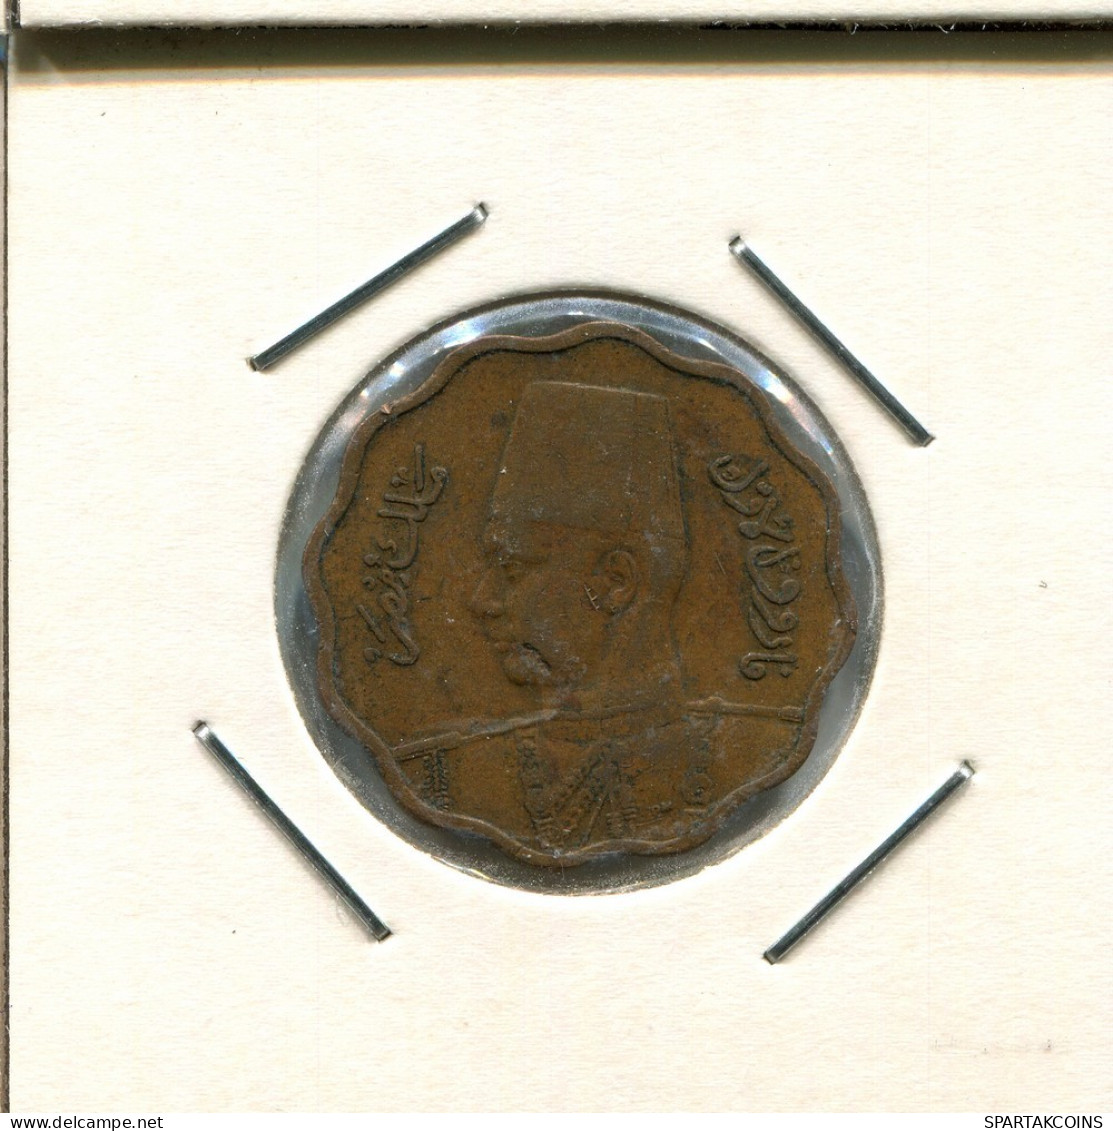 10 MILLIEMES 1943 EGYPT Islamic Coin #AS167.U.A - Egitto